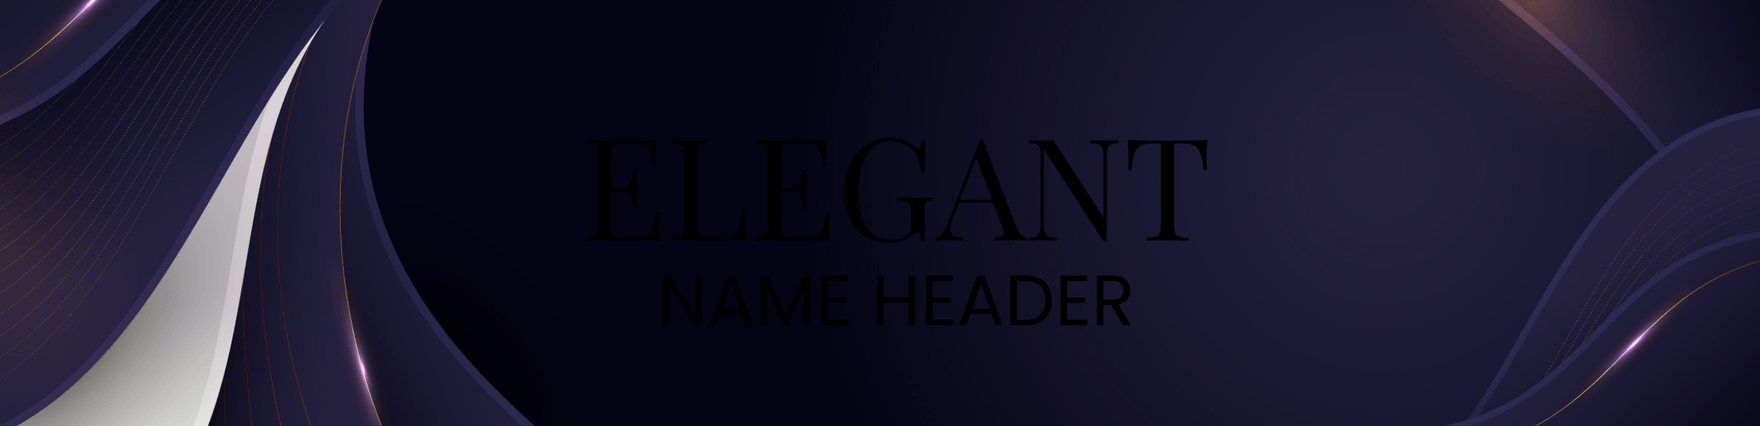 Elegant Name Header Template